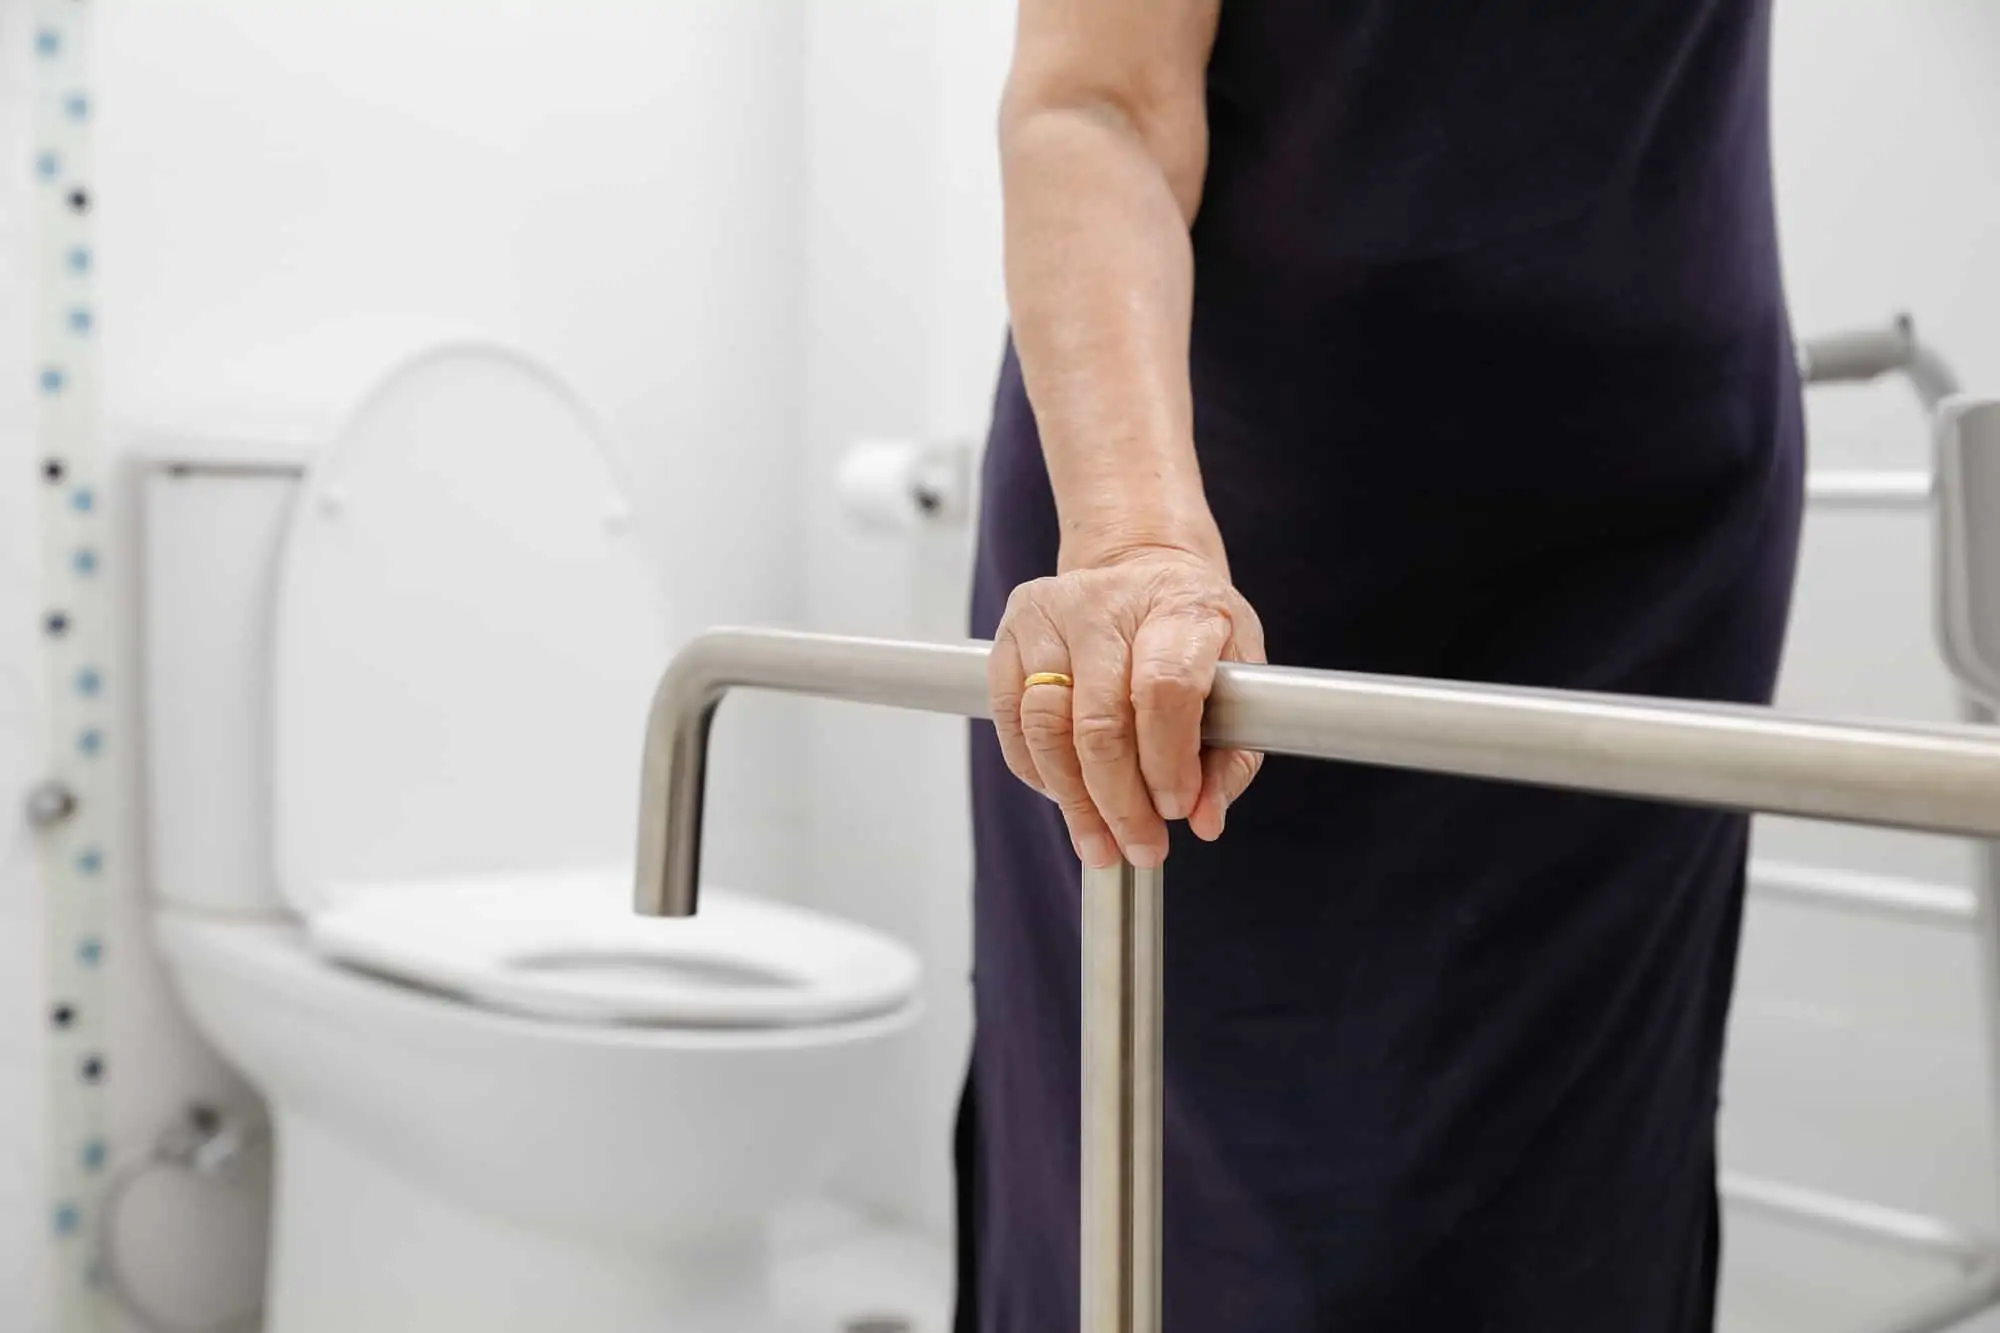 toilet-safety-rail-for-seniors